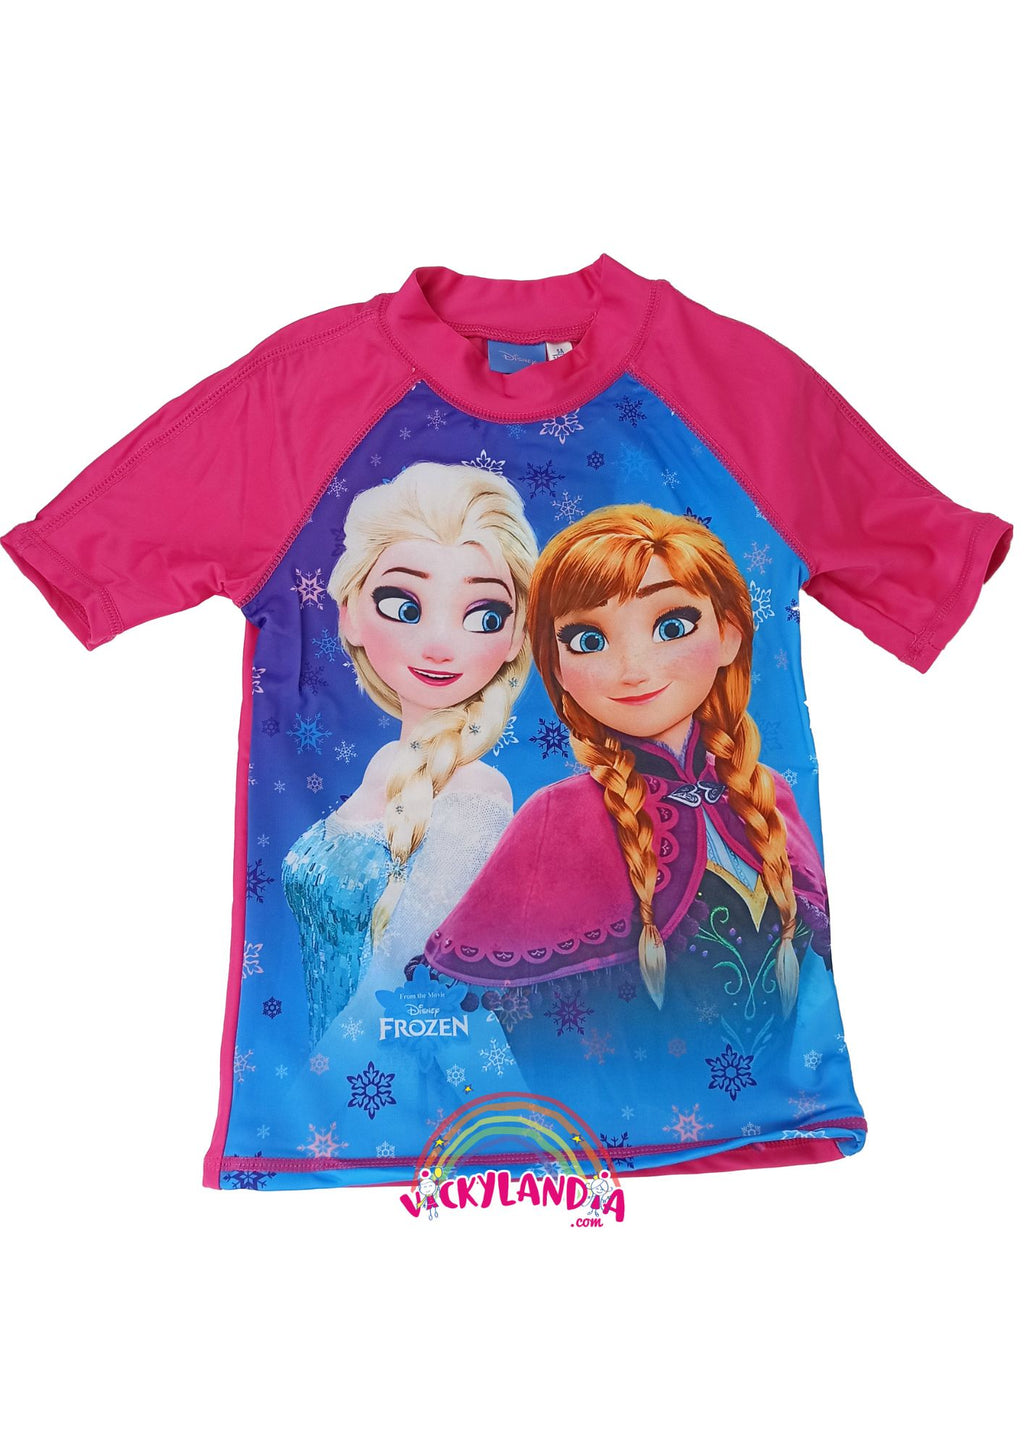 Camiseta de baño princesa Frozen Elsa Anna Olaf Disney Vickylandia